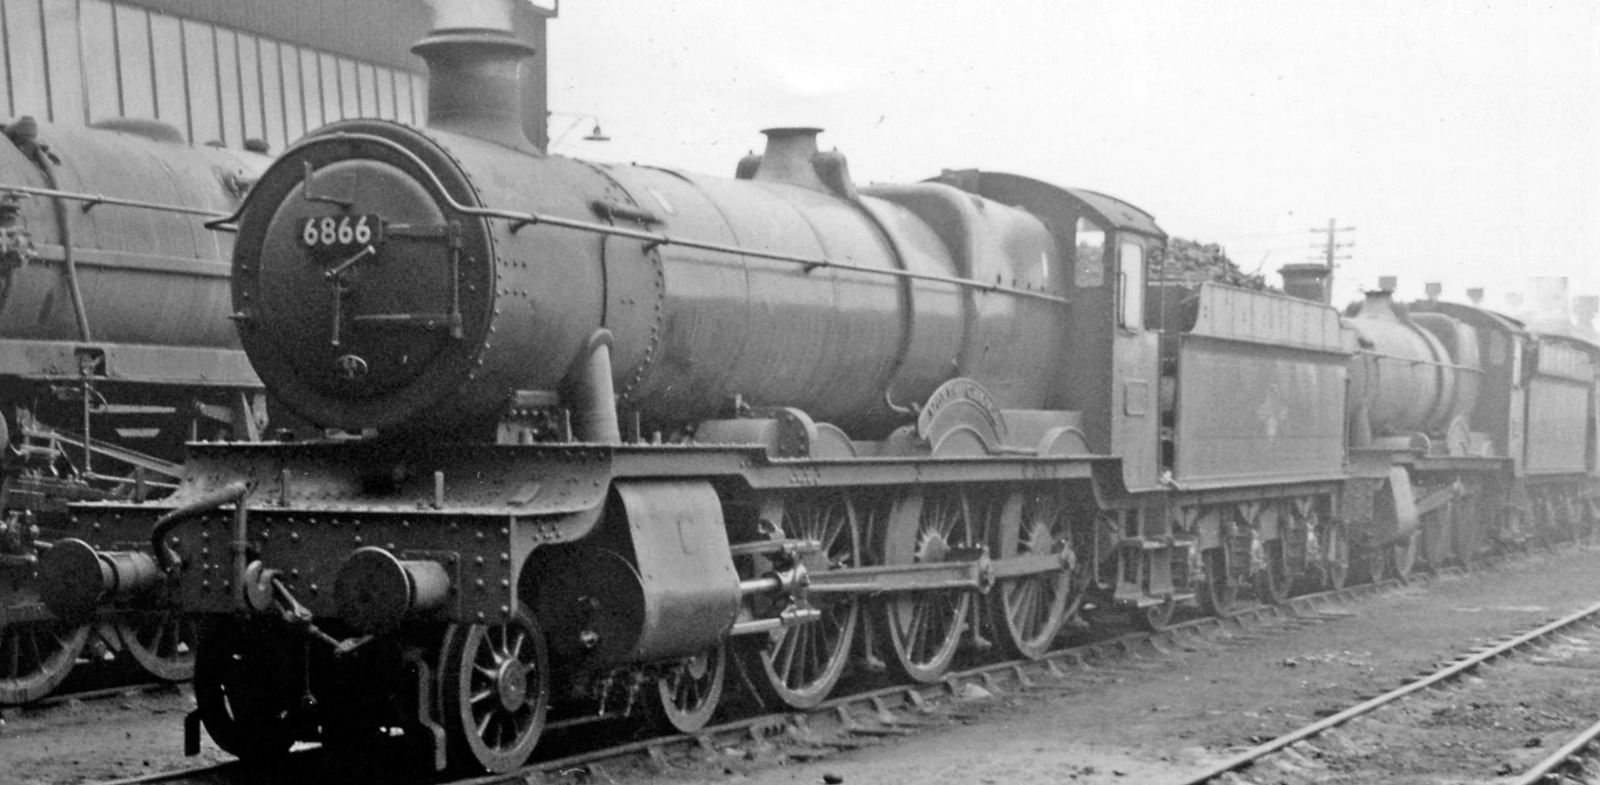 No. 6866 “Morfa Grange” in front of No. 6824 “Ashley Grange” at Southall Depot in November 1962